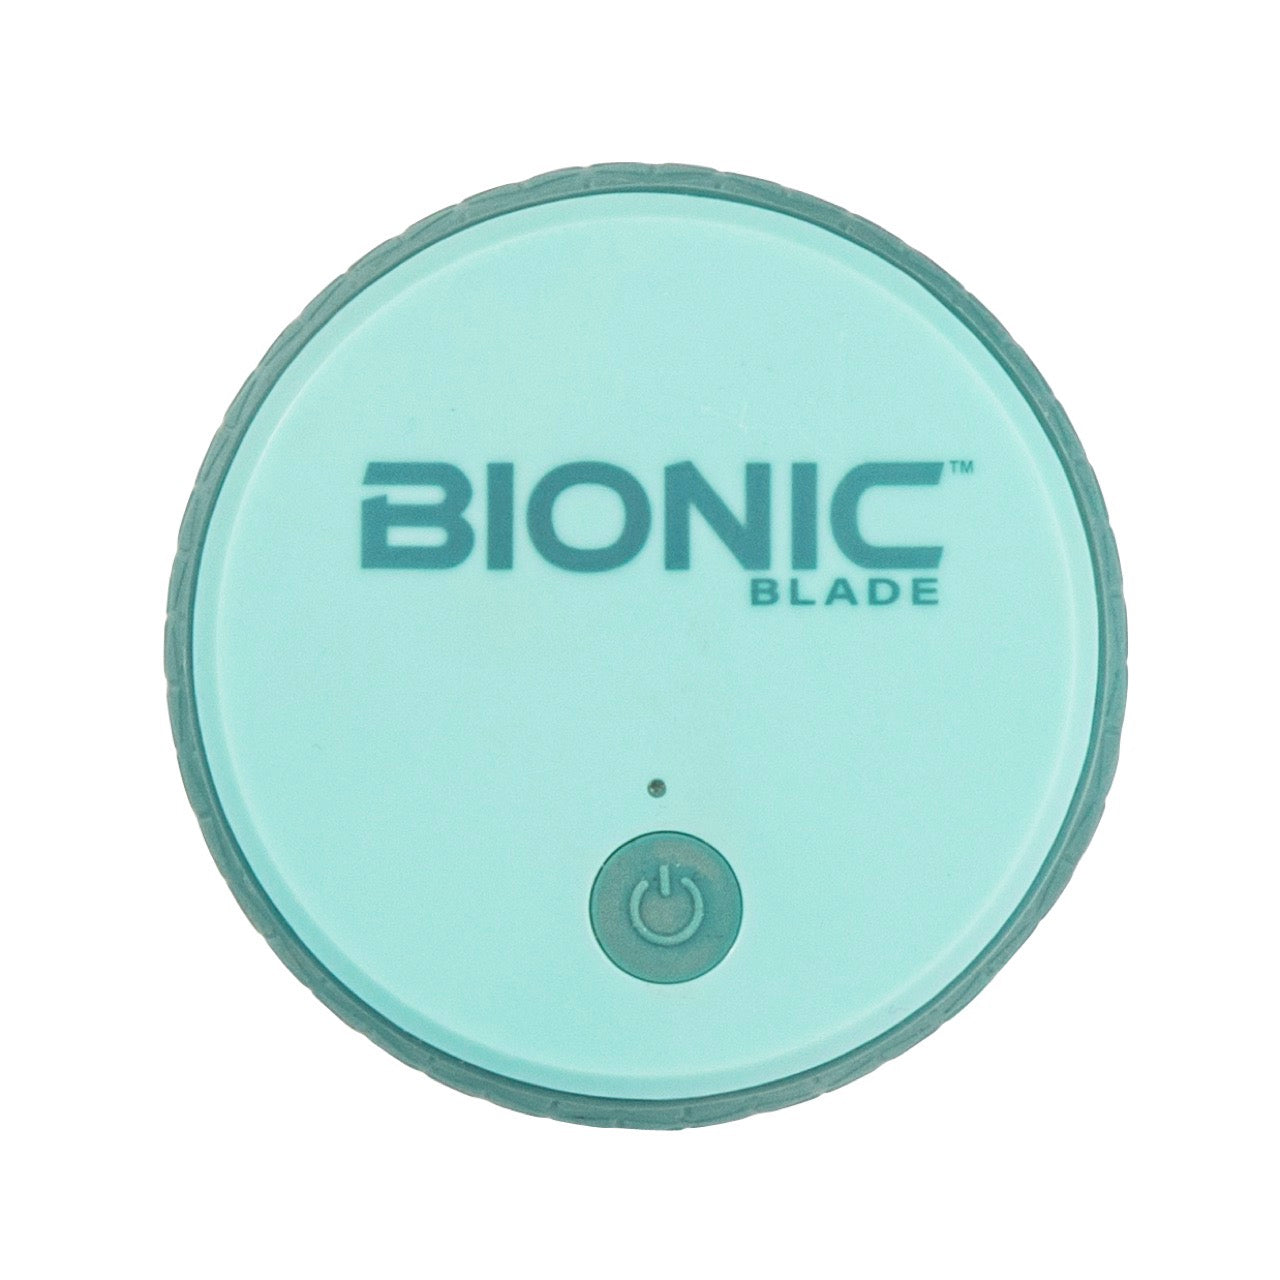 Bionic Blade Portable Blender